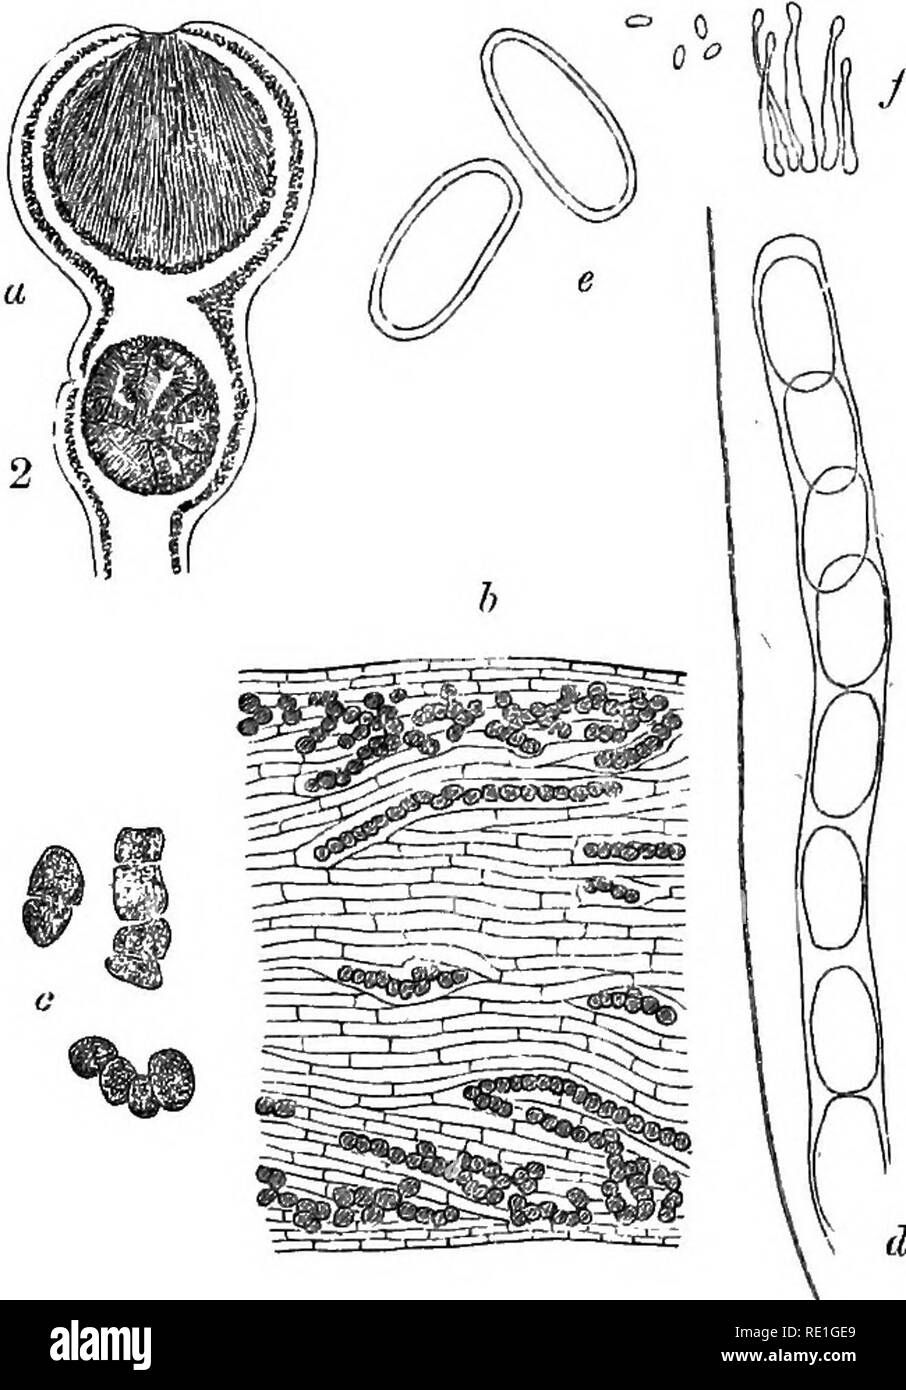 . A monograph of lichens found in Britain; being a descriptive catalogue of the species in the herbarium of the British Museum. Lichens. LICHINA.] LICHINEI. 31 Tribe I. LICHINEI Nyl. Mem. Soc. Cherb. ii. (1854) p. 8; Syn. i. p. 88, Stiz. St. Gall. Nat. Ges. 1876, p. 193. Thallus small, fruticulose or radiato-laciniate, firm or fragile; gonimia elongate - seriately moniliform, suboonnate. Apothecia small, lecanorine, lecideine or sub-biatorine, paraphyses slender or tMckish; spores 8n8e, ellipsoid, simple or septate. Spermogones tuberculose, with simple sterigmata or jointed sterigmata. The pri Stock Photo